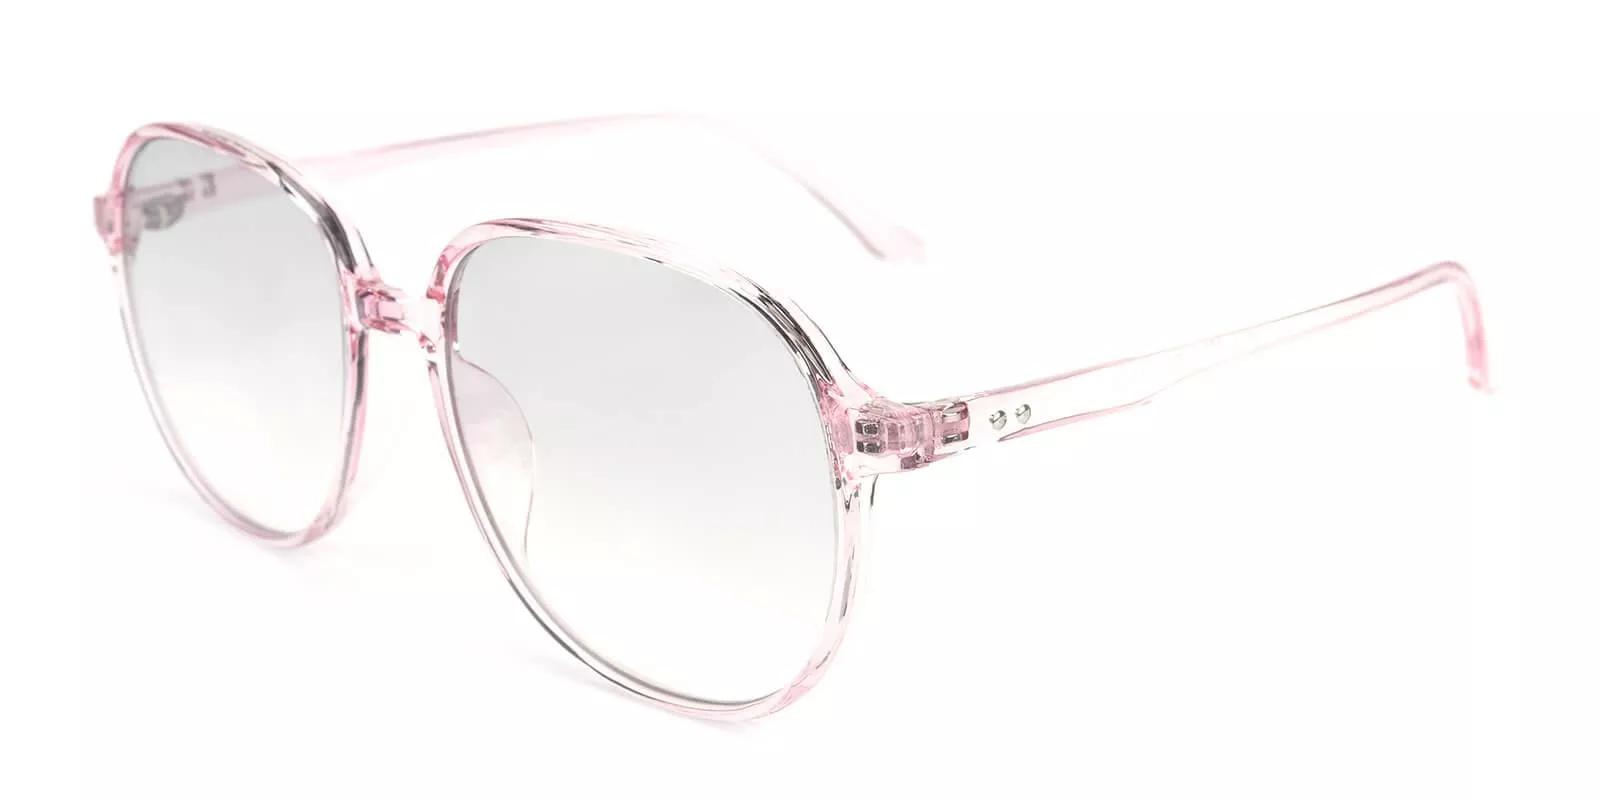 Palm Bay Prescription Sunglasses Clear Pink